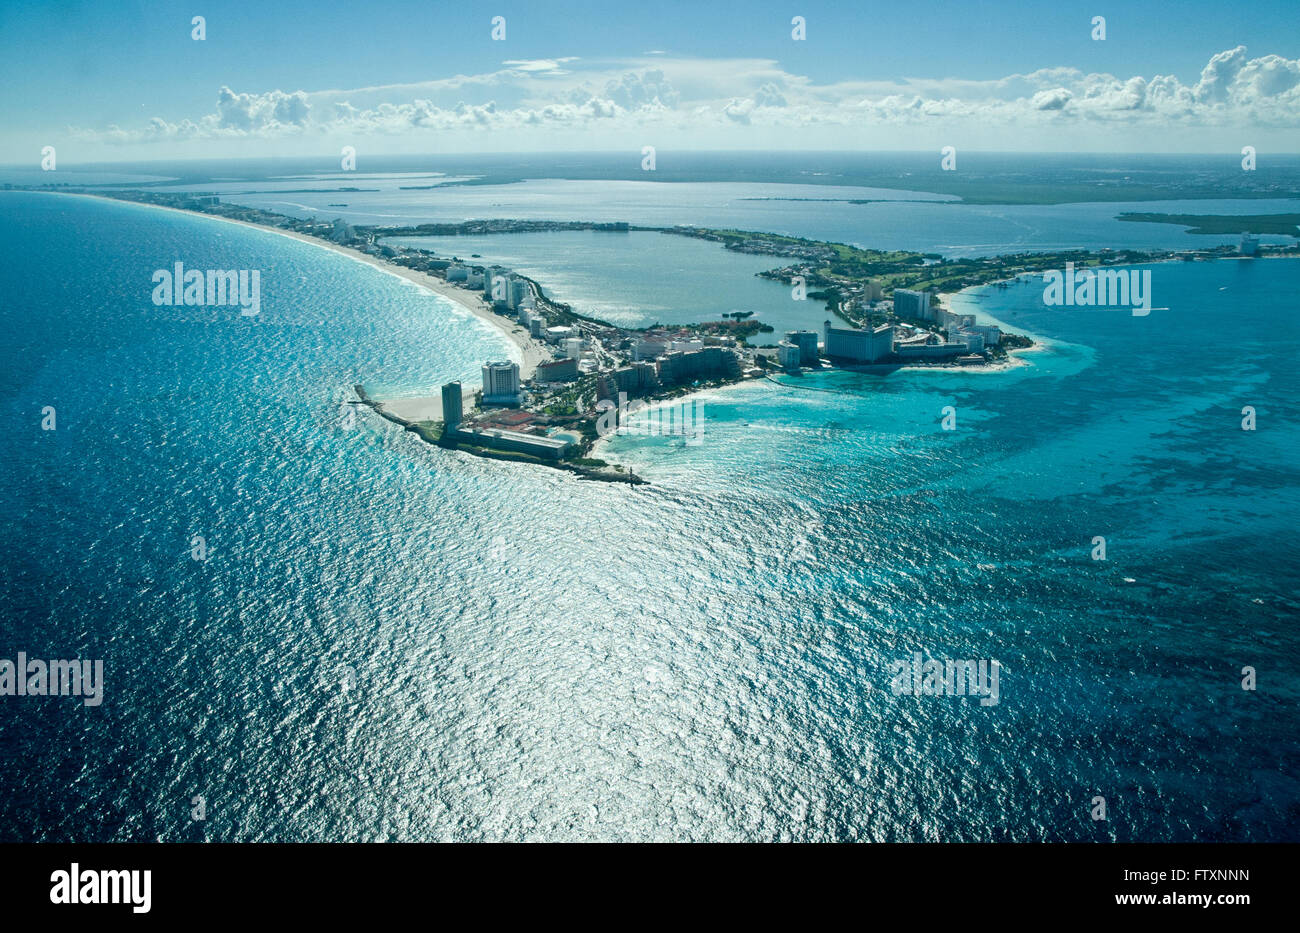 Aerial view of cancun coastline, Mexico Stock Photo